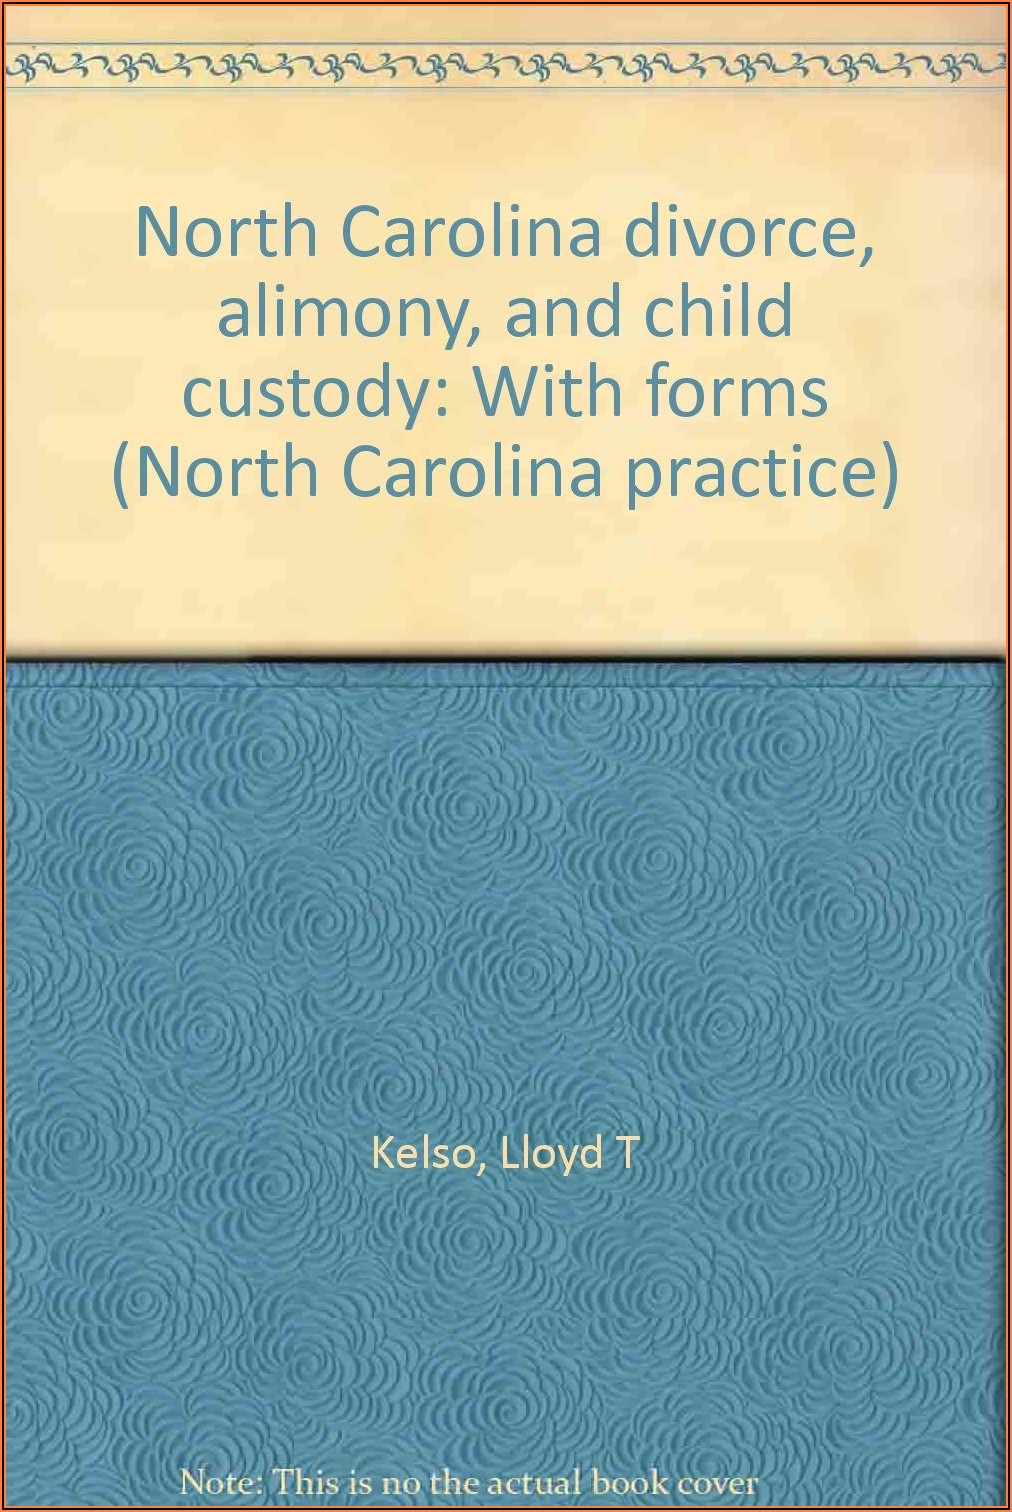 North Carolina Custody Forms